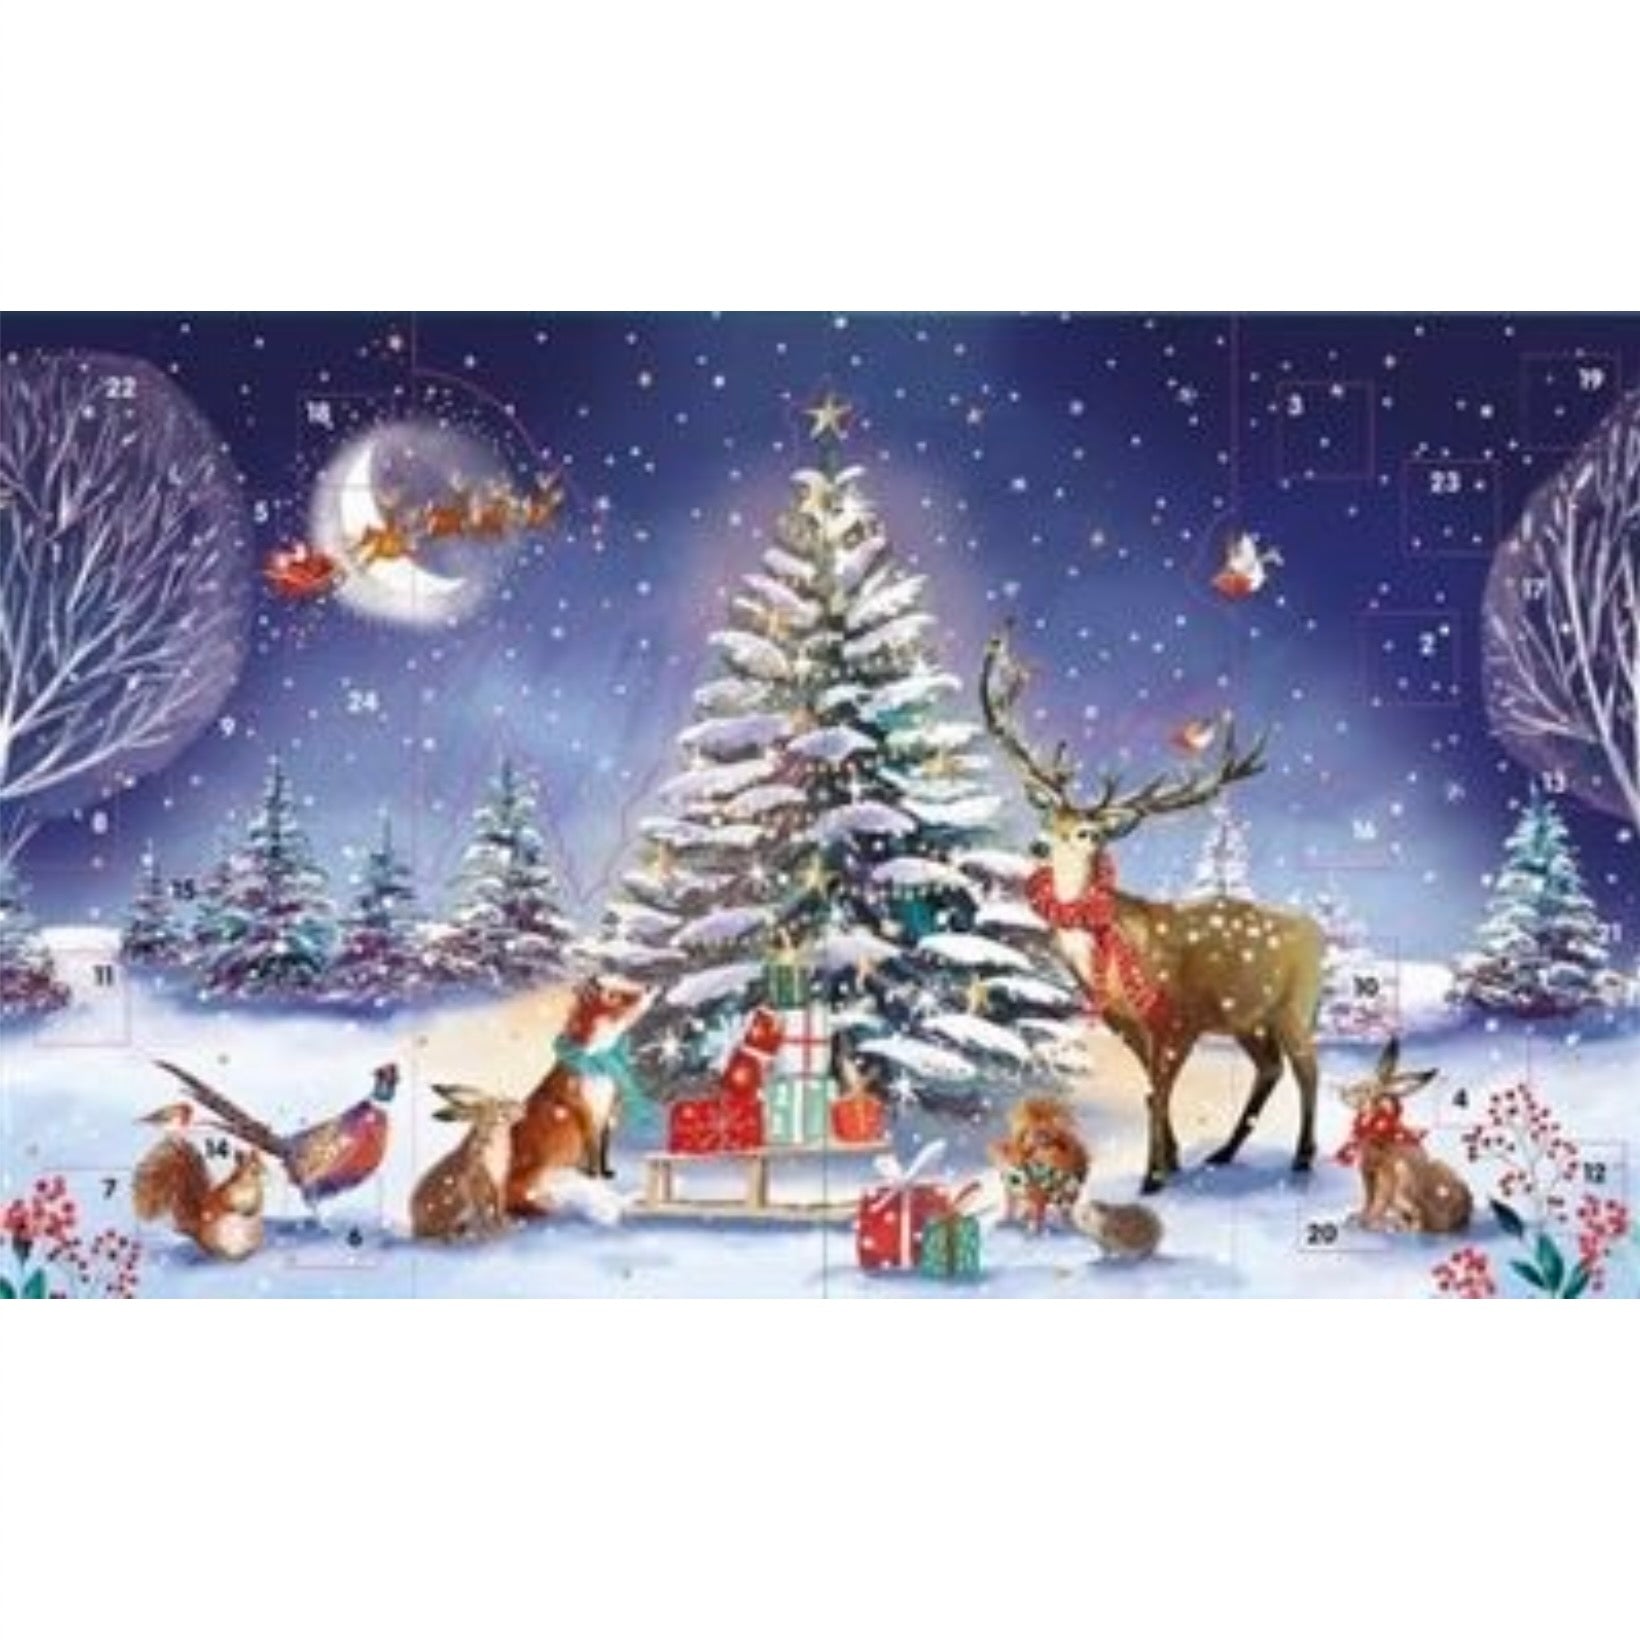 A Woodland Christmas Advent Calendar